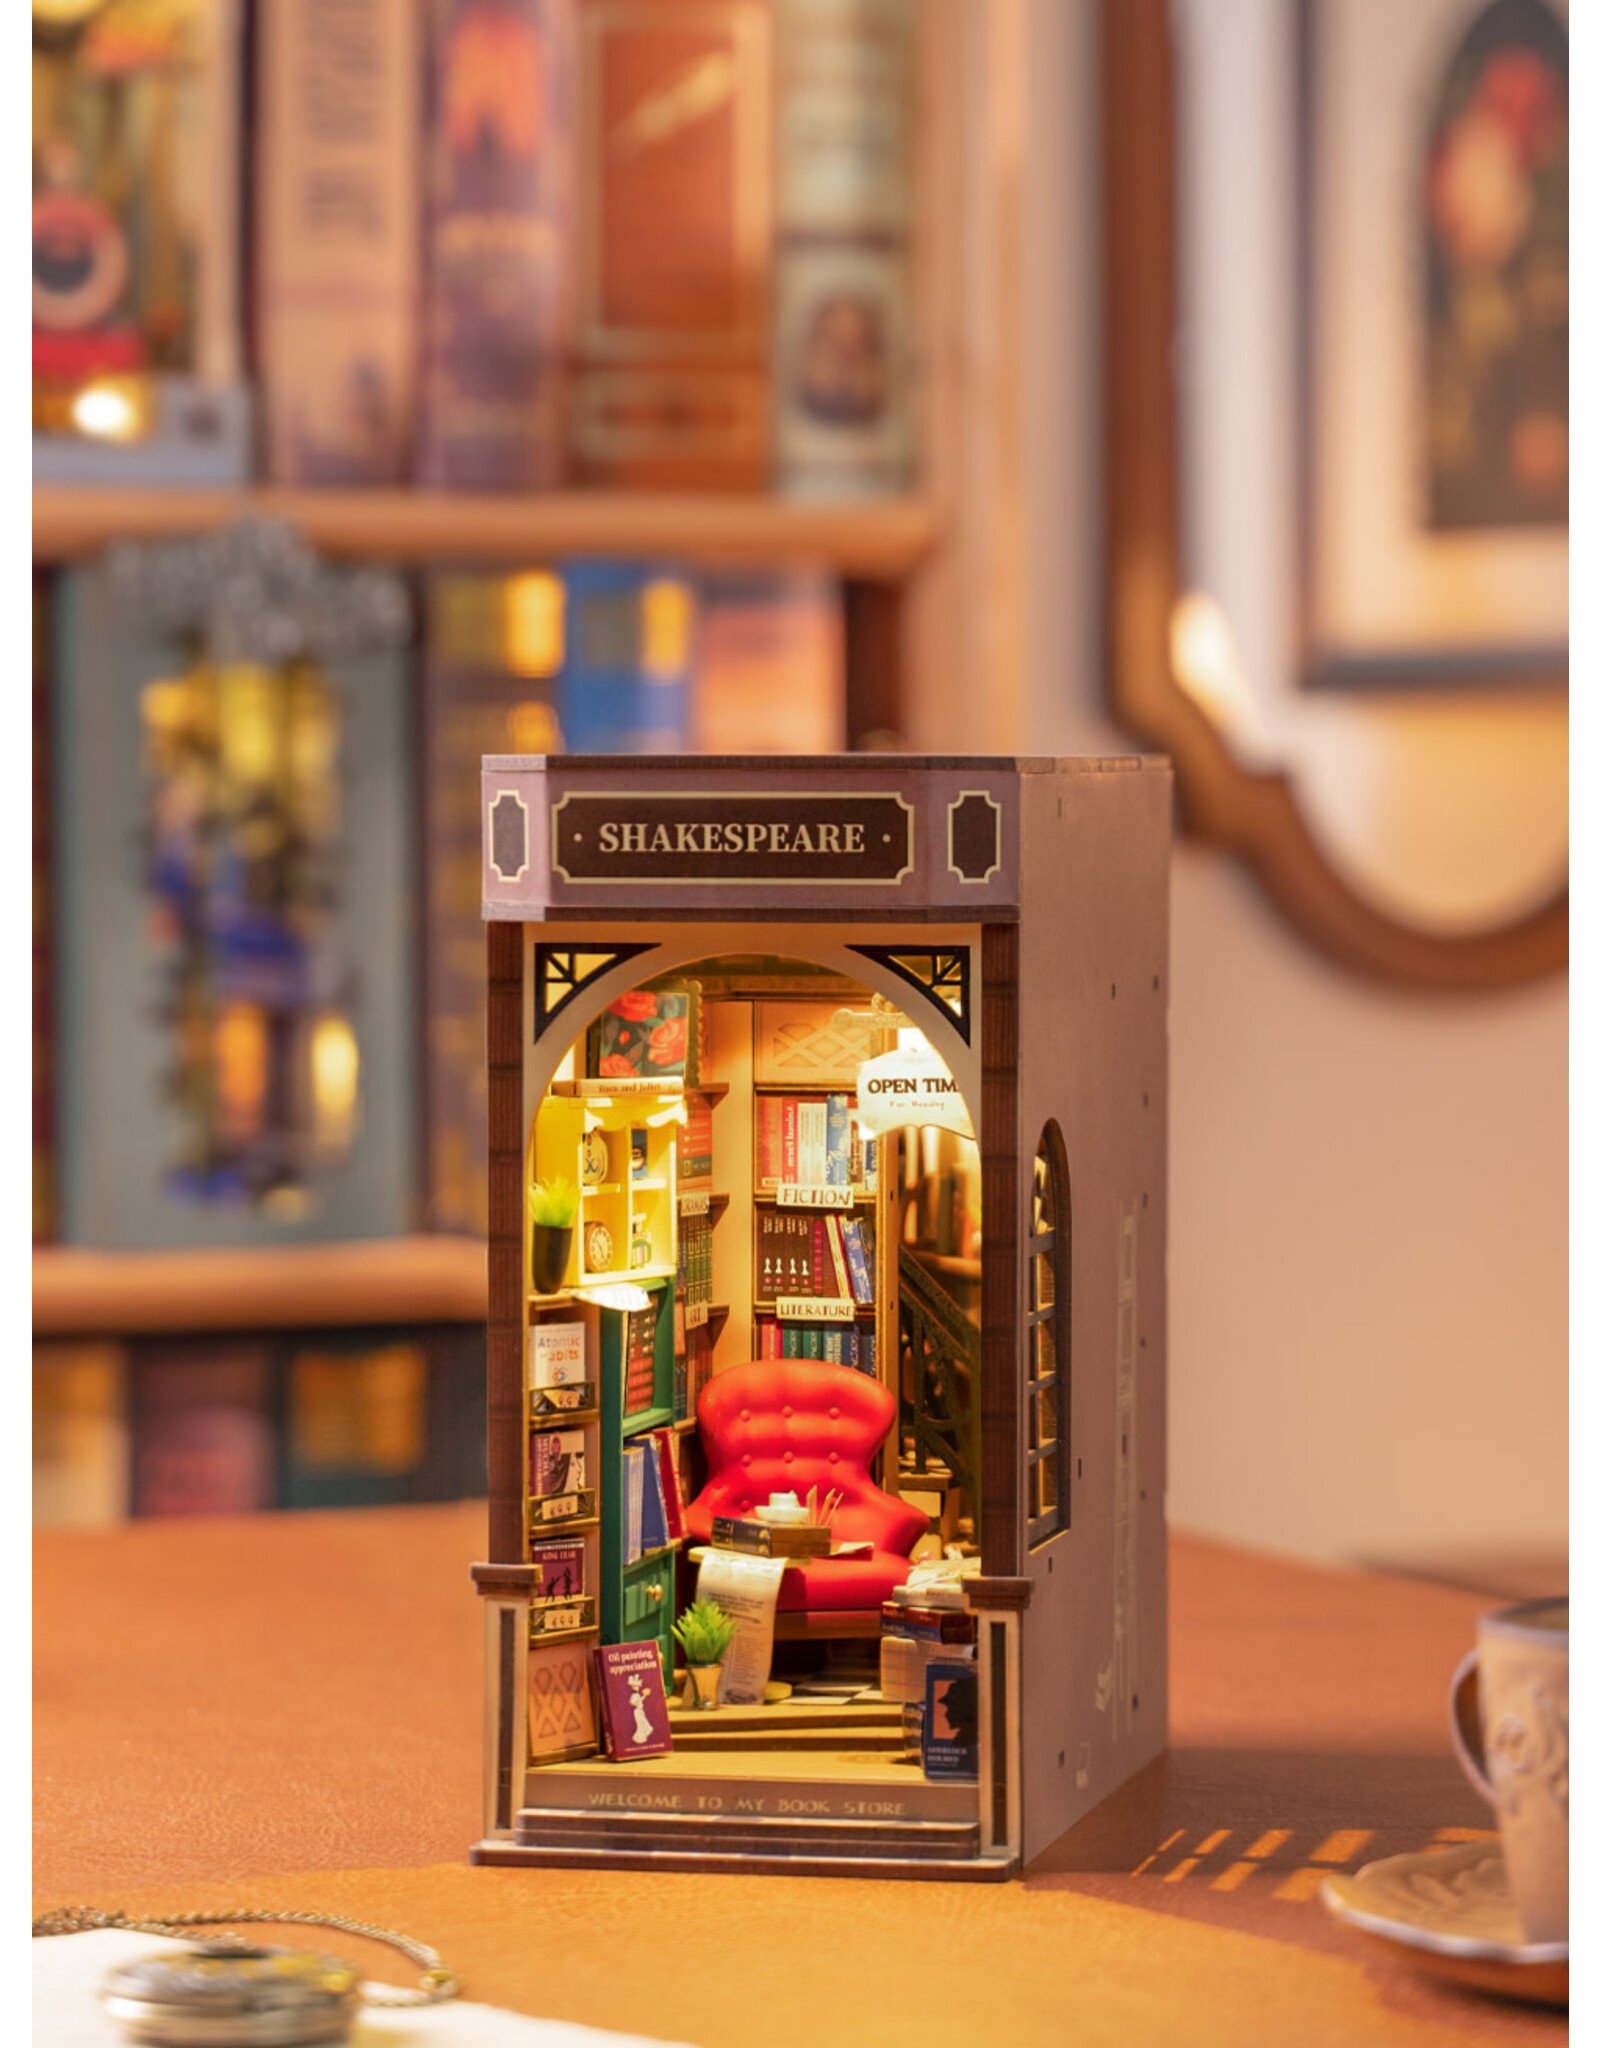 Bookstore (Book Nook) TGB07 - Rolife DIY Miniature Dollhouse